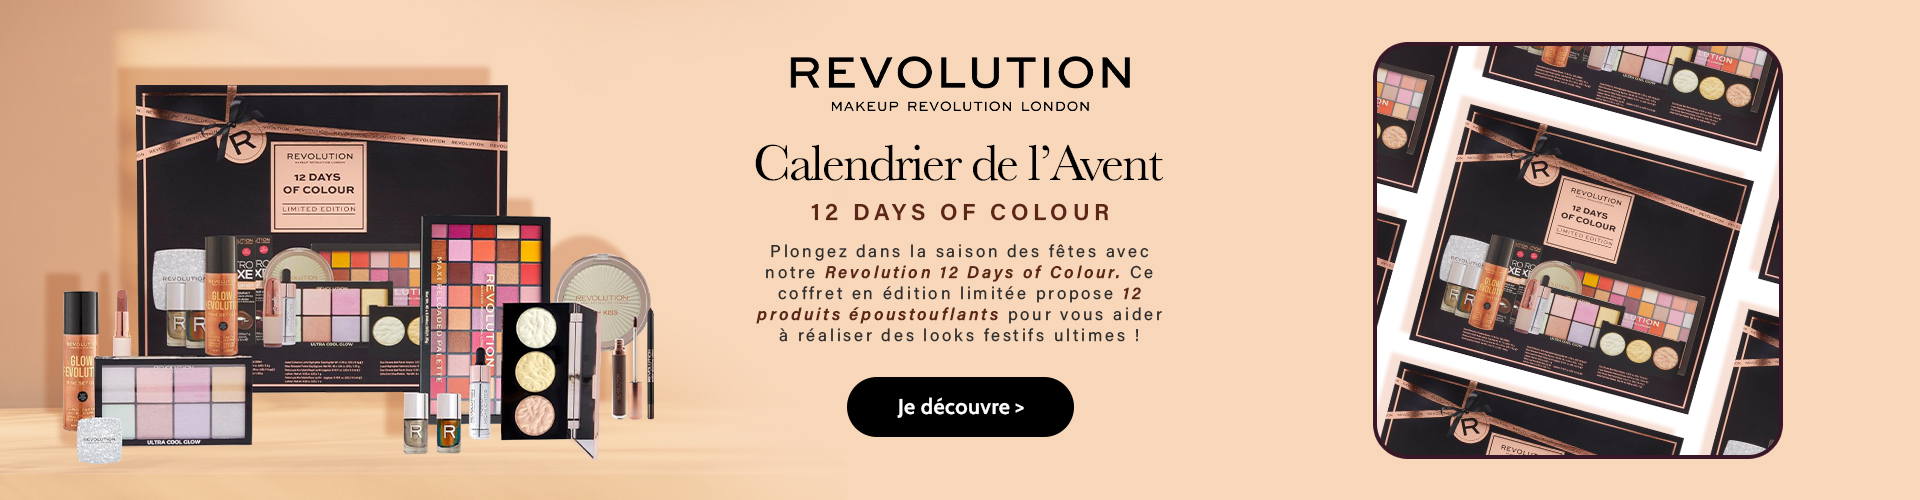 Calendrier Revolution 12 Days Of Colour